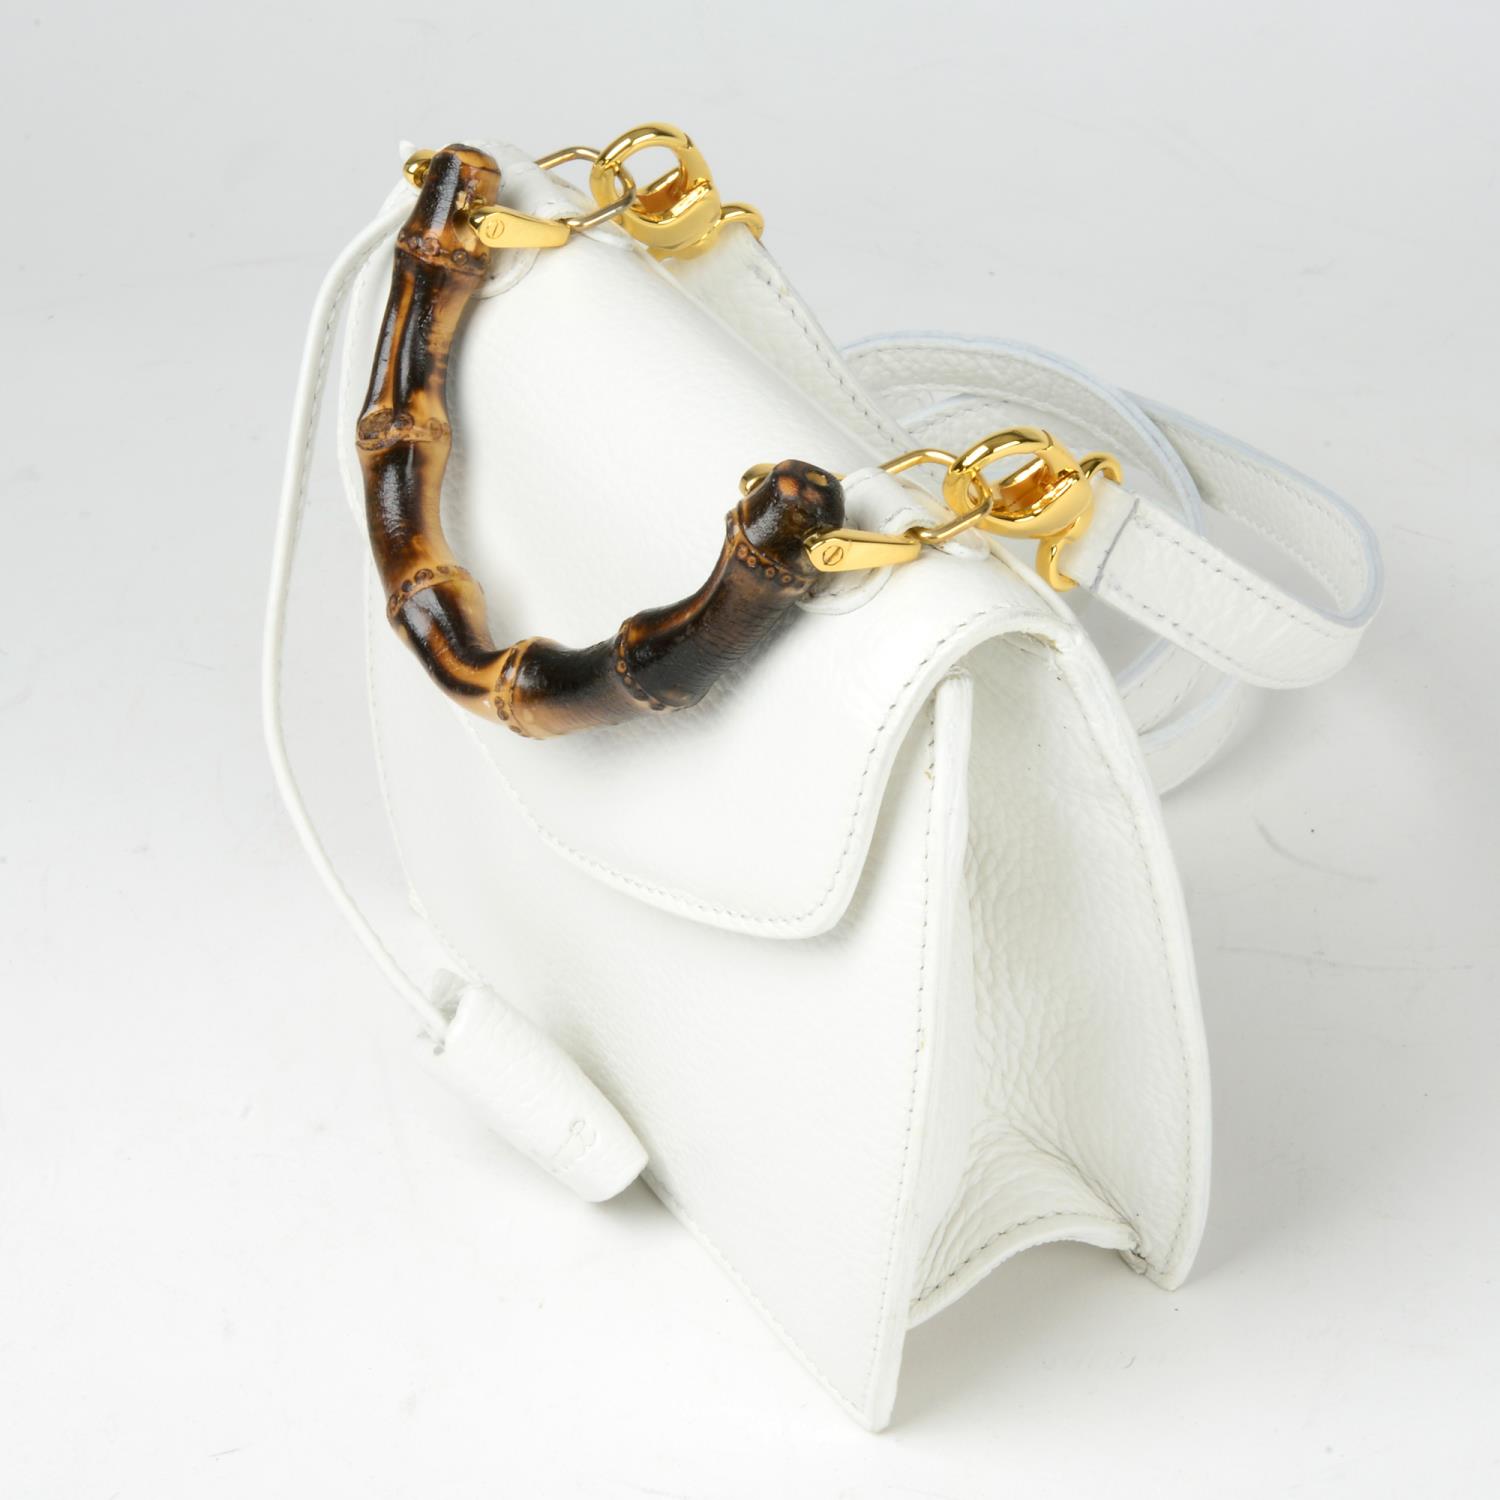 BUTI PELLETTERIE - a mini Minny white leather handbag. - Image 3 of 4